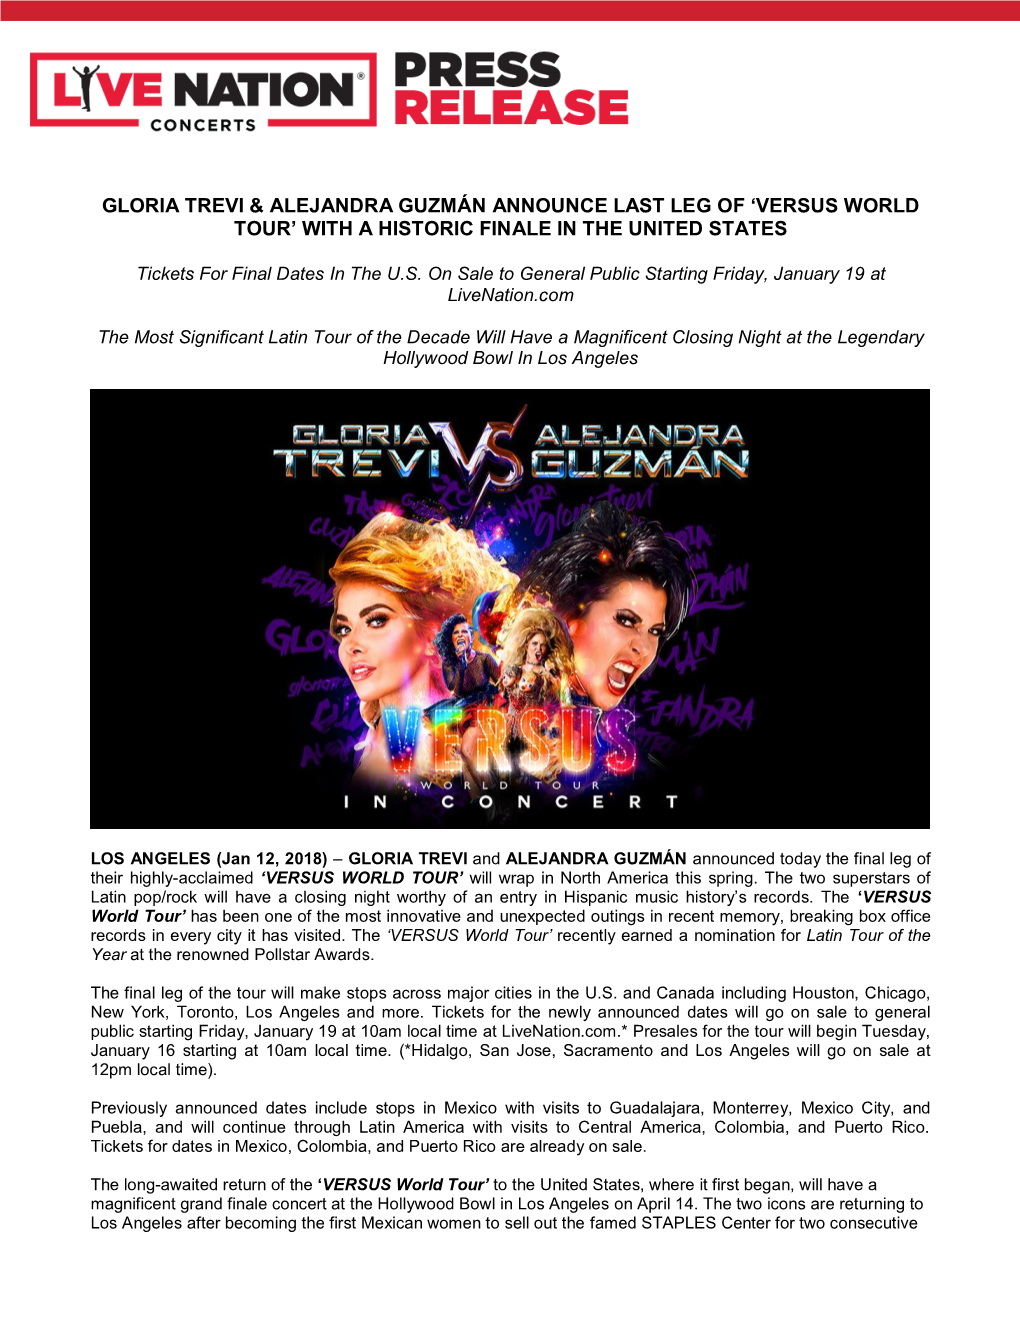 Gloria Trevi & Alejandra Guzmán Announce Last Leg